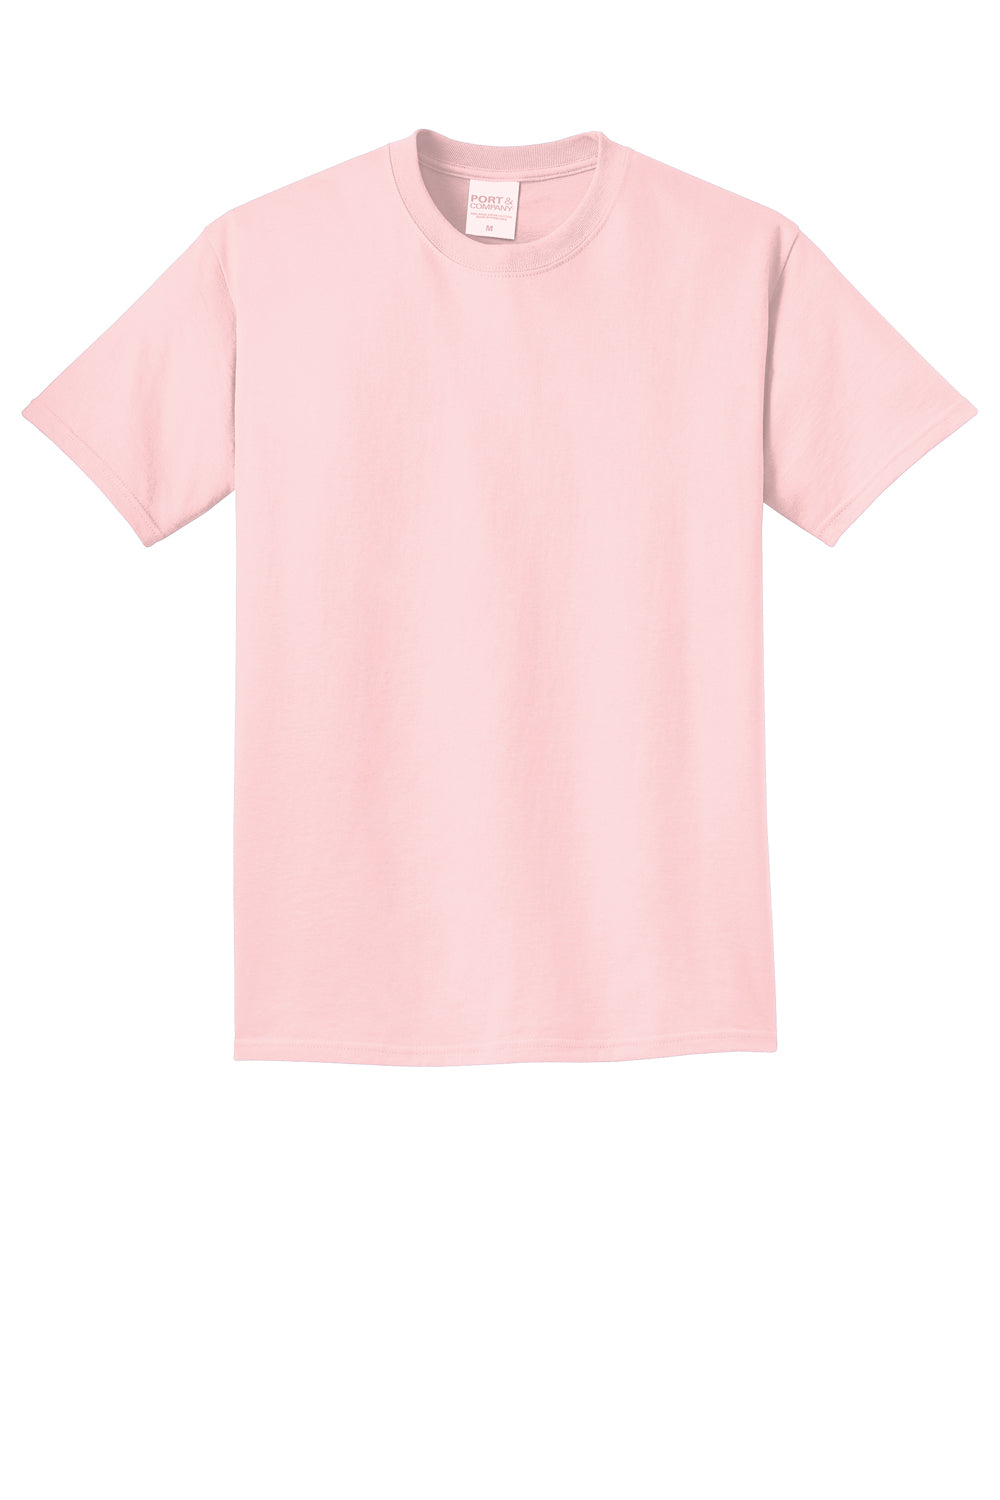 Port & Company PC099 Mens Beach Wash Short Sleeve Crewneck T-Shirt Cherry Blossom Pink Flat Front